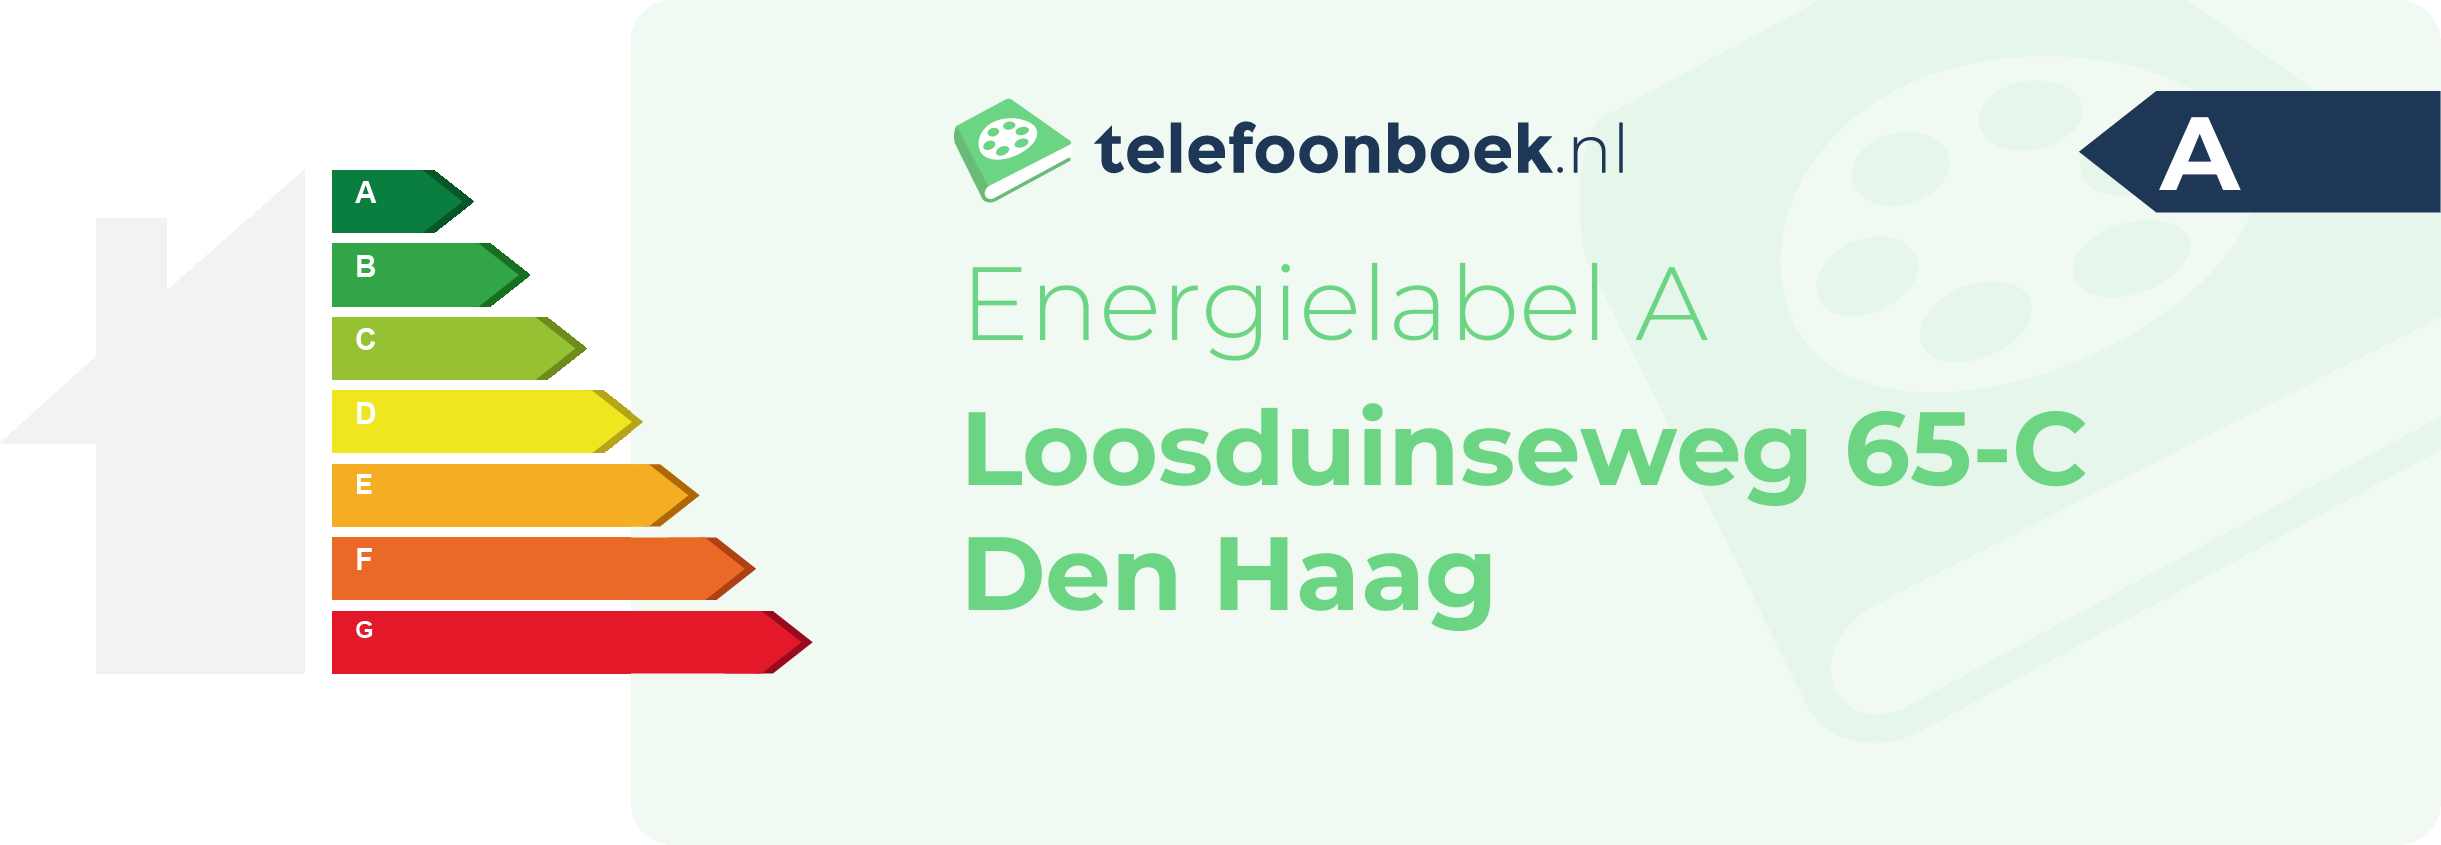 Energielabel Loosduinseweg 65-C Den Haag